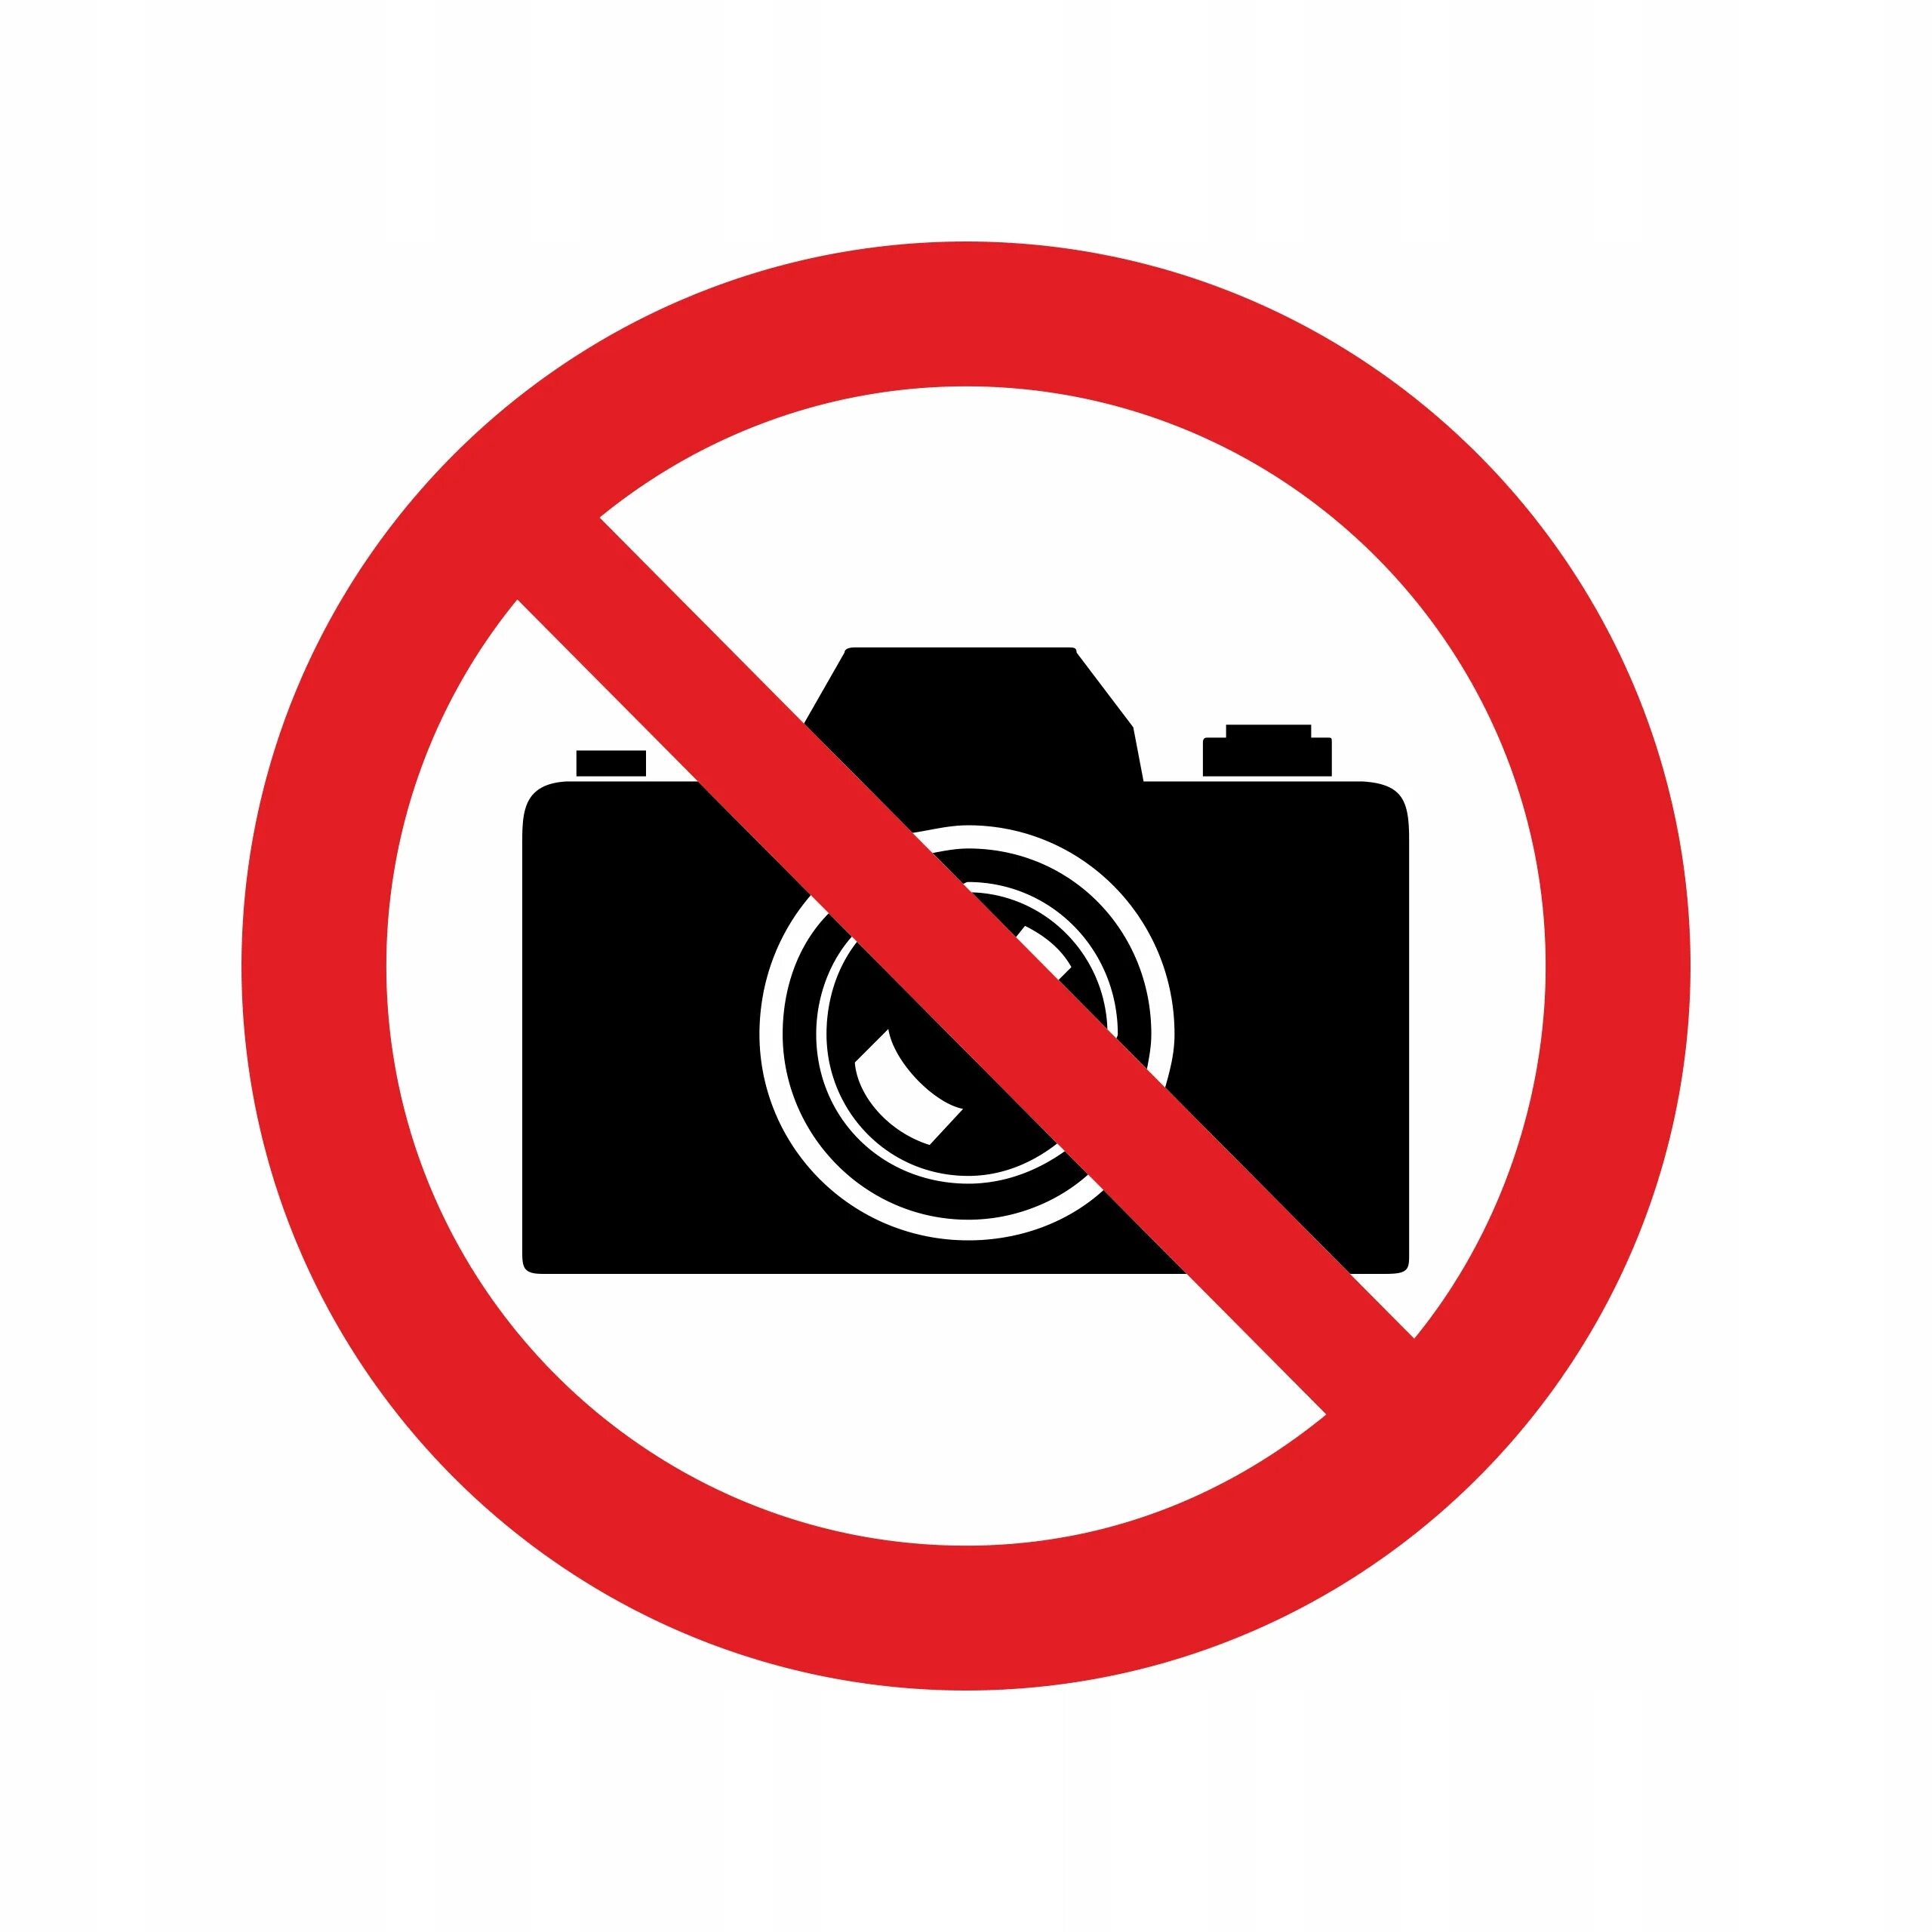 Zakaz b. Табличка съемка запрещена. Фотосъемка запрещена знак. Видеосъемка запрещена знак. Фотографировать запрещено знак.